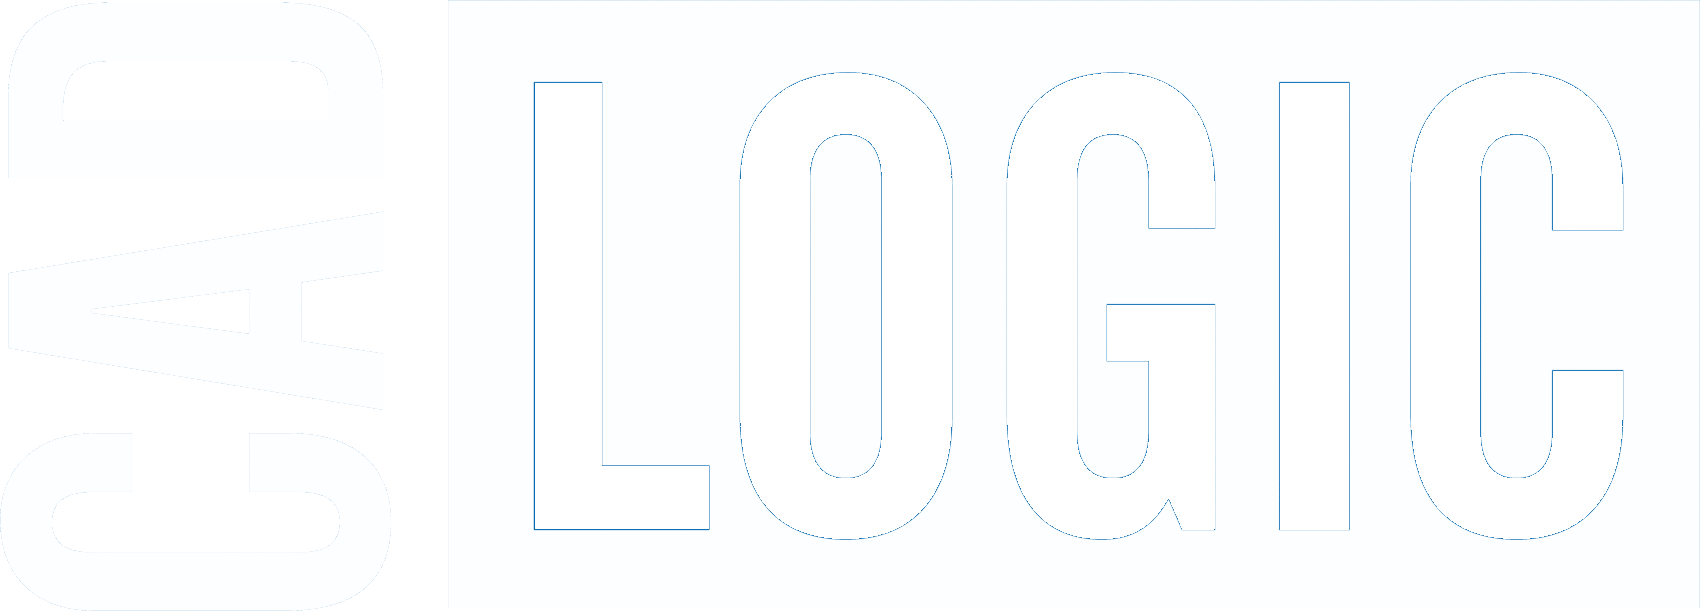 Cadlogic company branding logo image